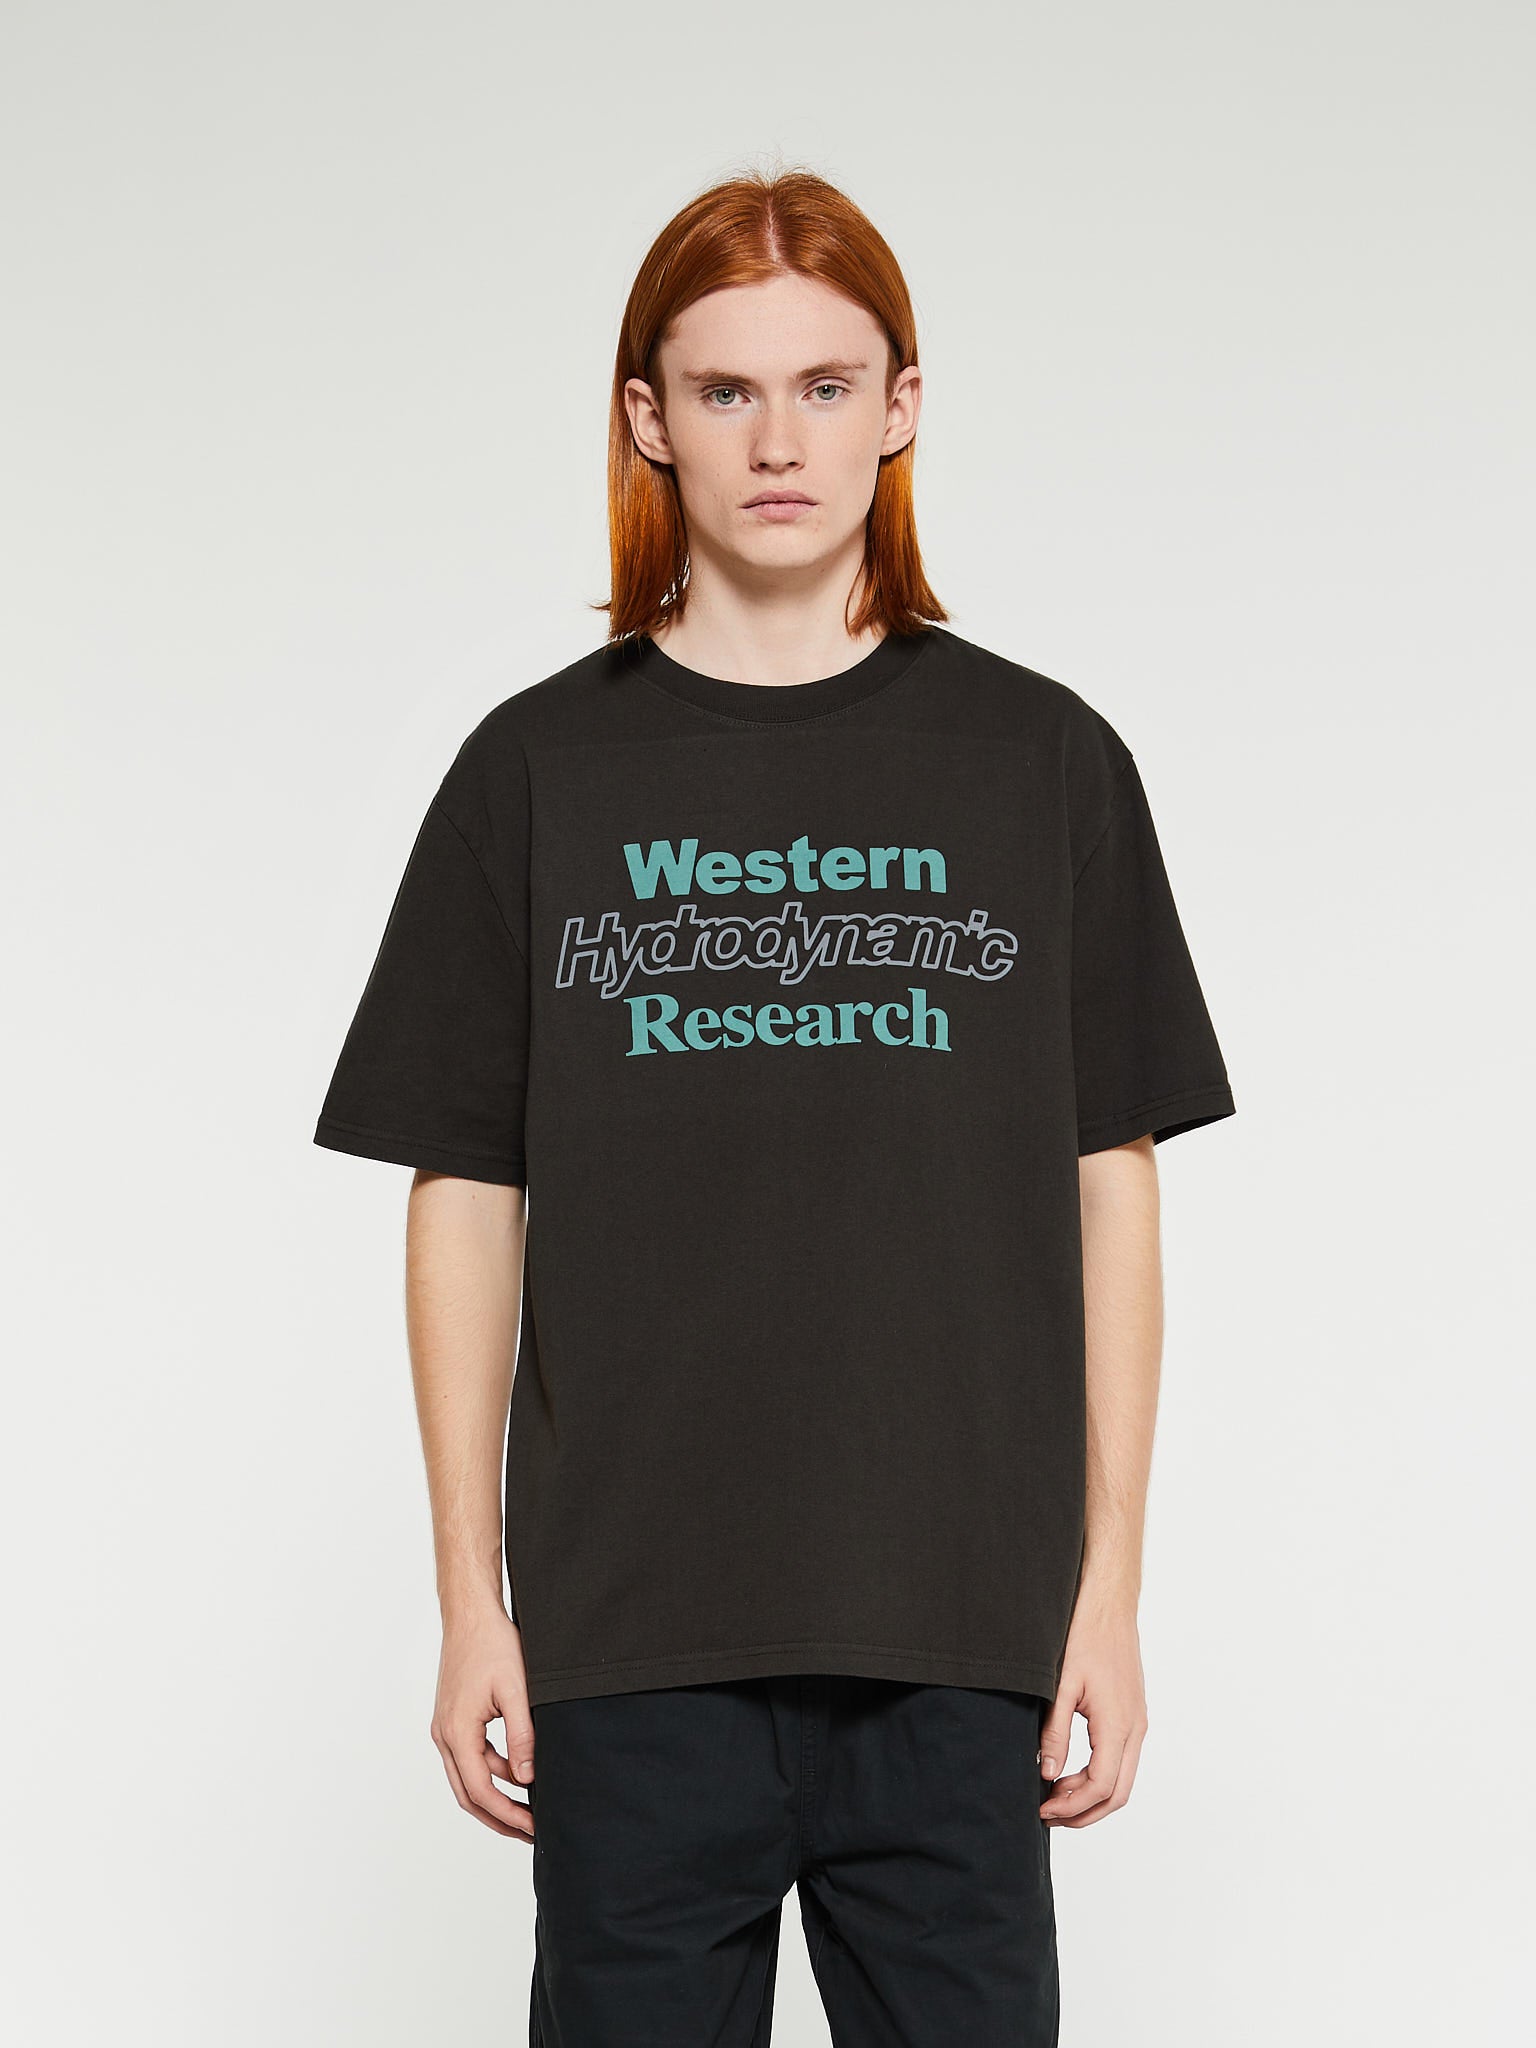 Western Hydrodynamic Research - Wave Runner Tee in Black